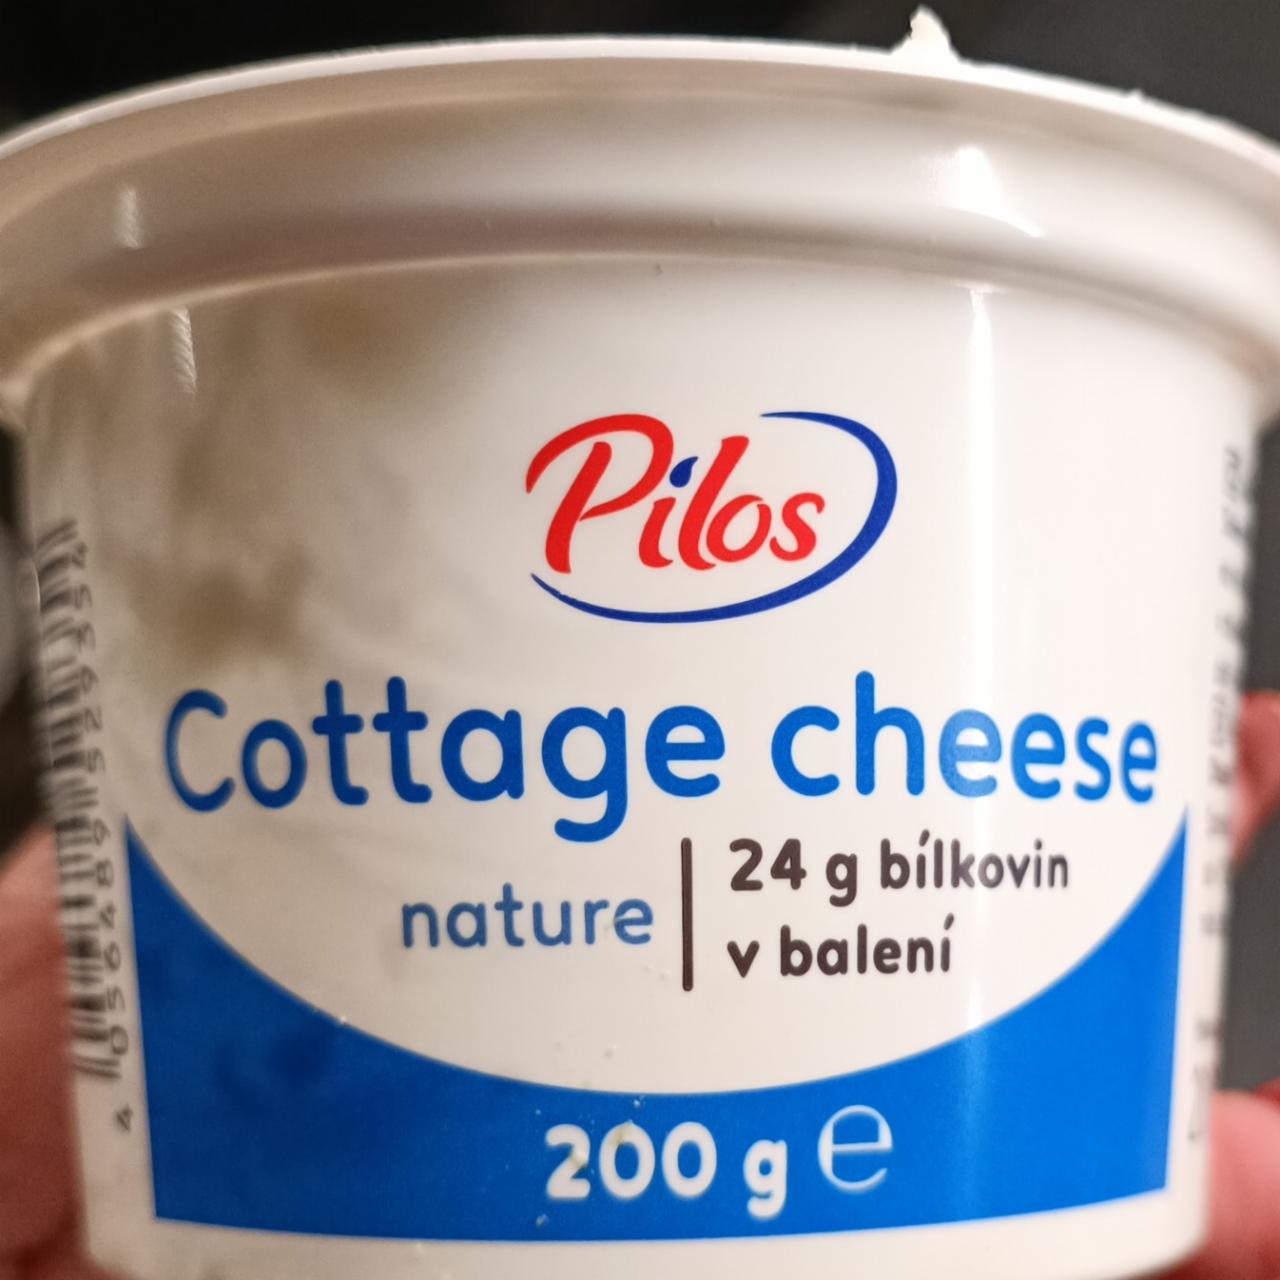 Fotografie - Cottage cheese nature Pilos